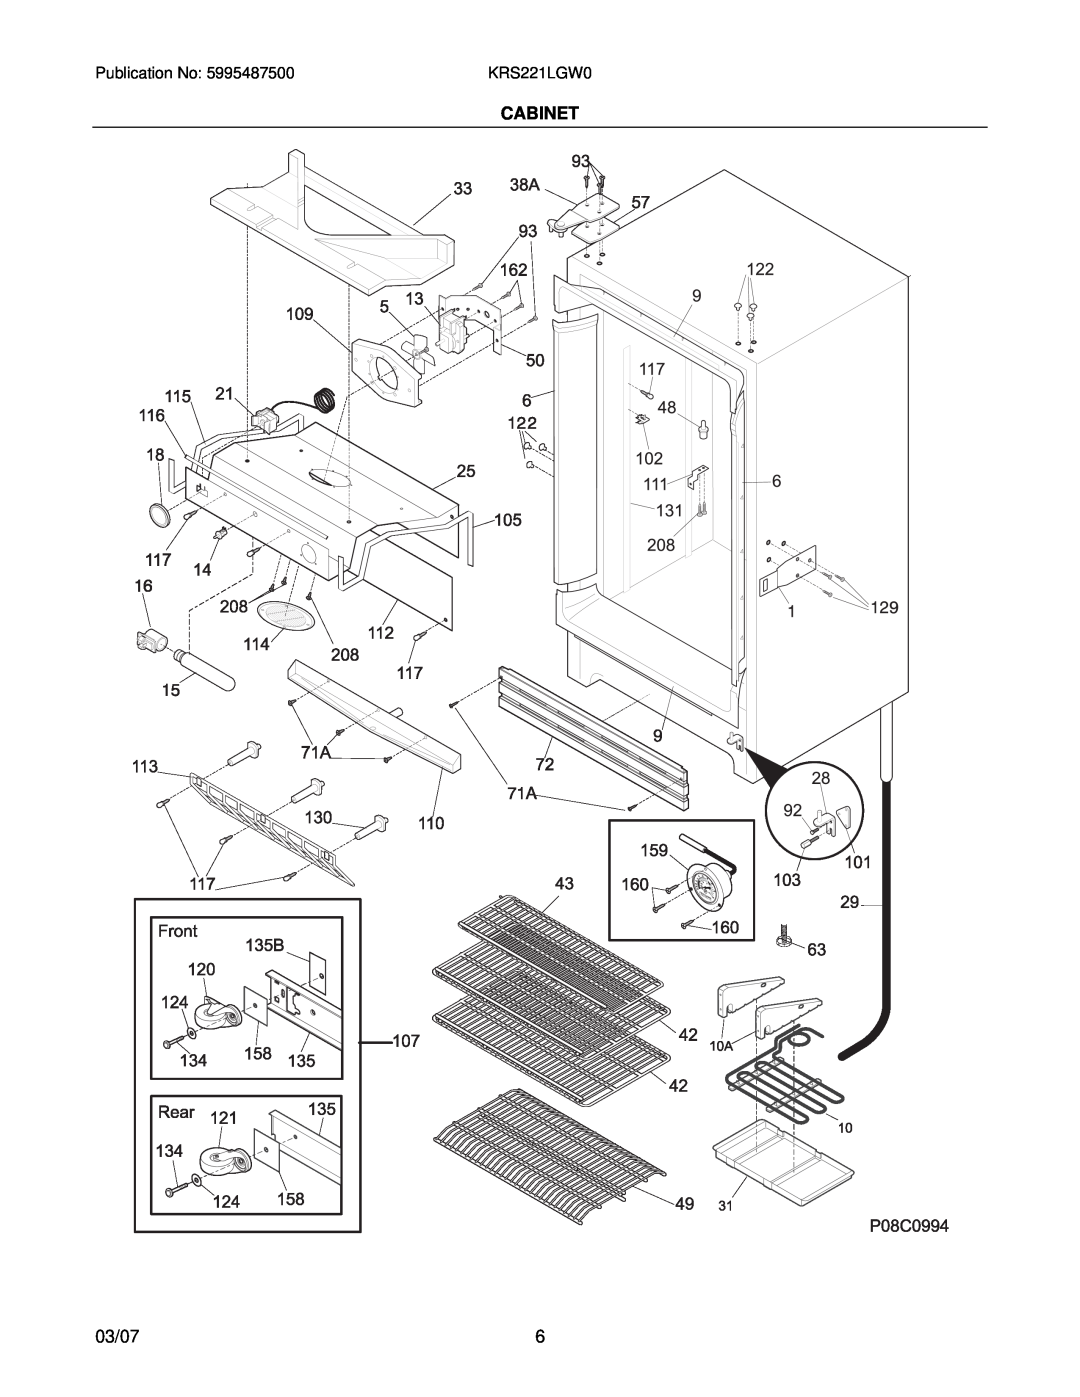 Electrolux manual Cabinet, 03/07, KRS221LGW0 